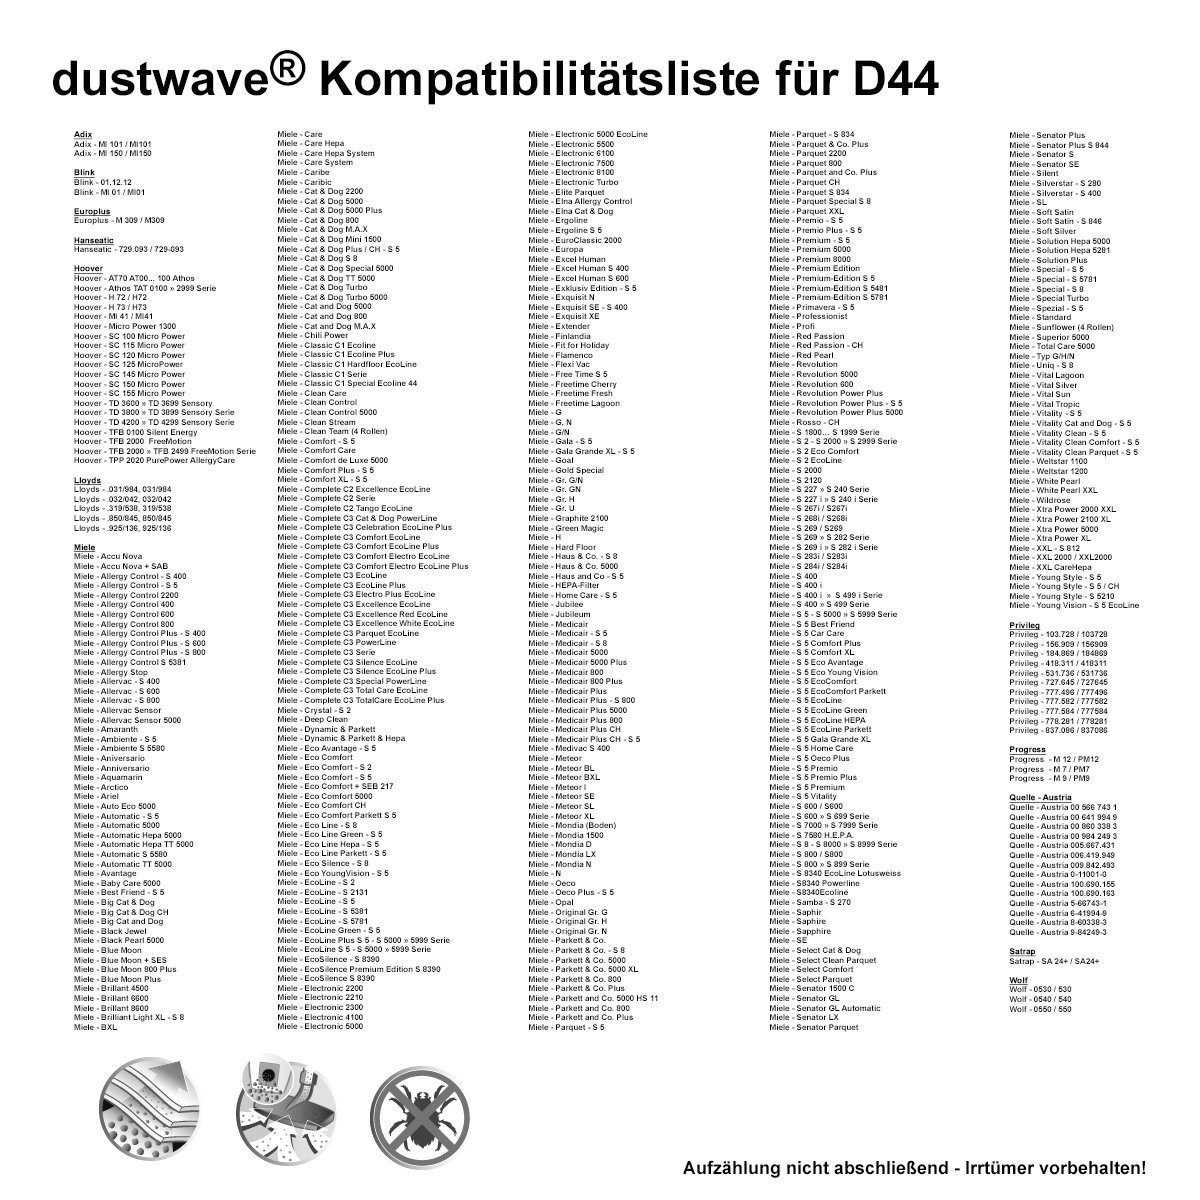 Adix MI Dustwave + zuschneidbar) Premium 2 150 MI / Hepa-Filter - Adix Staubsaugerbeutel Megapack, (ca. 20 MI150 150 - Megapack, 15x15cm für MI150, Staubsaugerbeutel St., 20 passend /